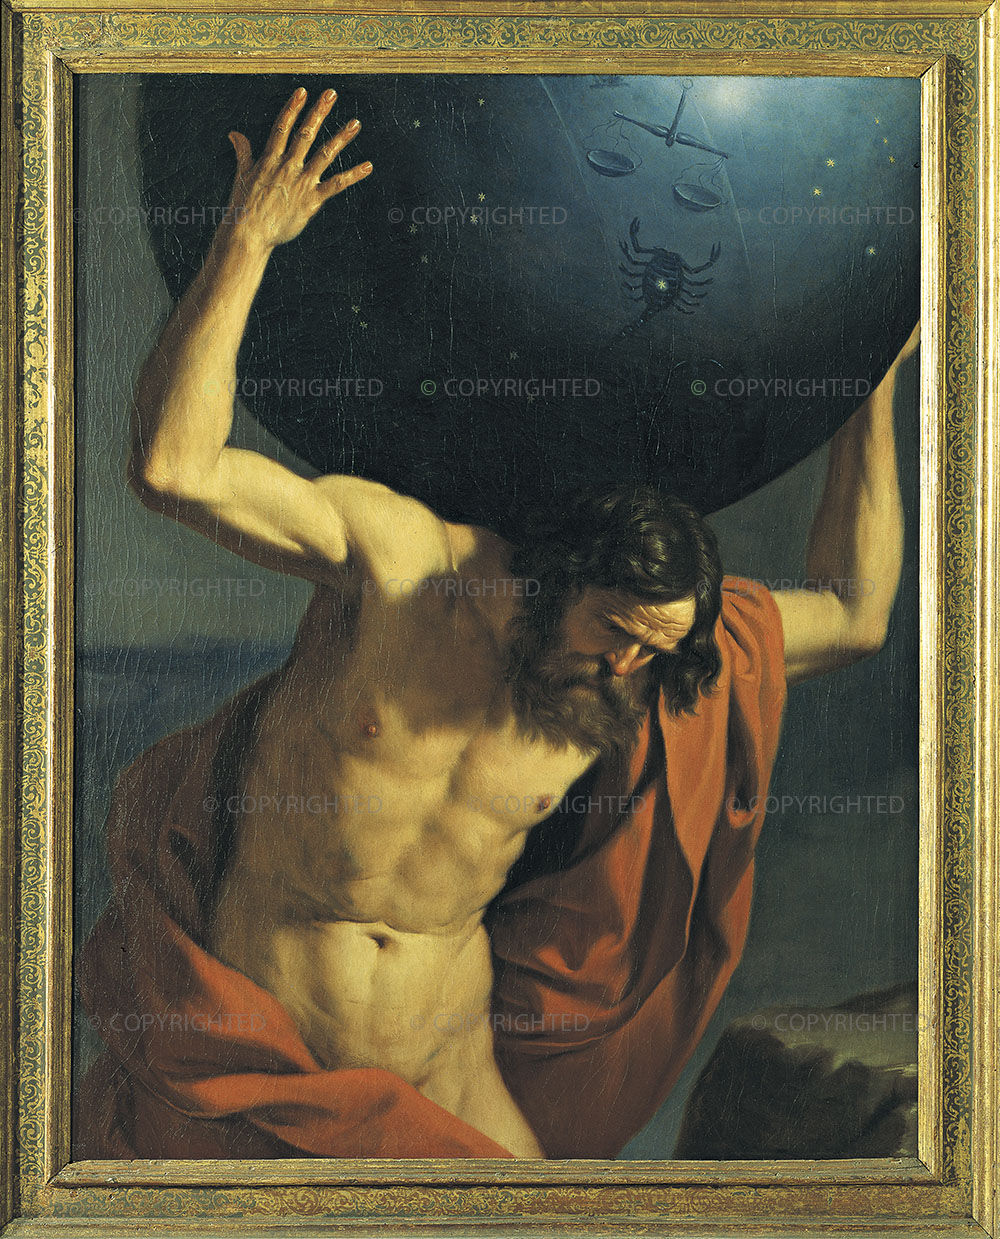 Giovanni Francesco Barbieri, known as Guercino, Atlas holding up the celestial globe